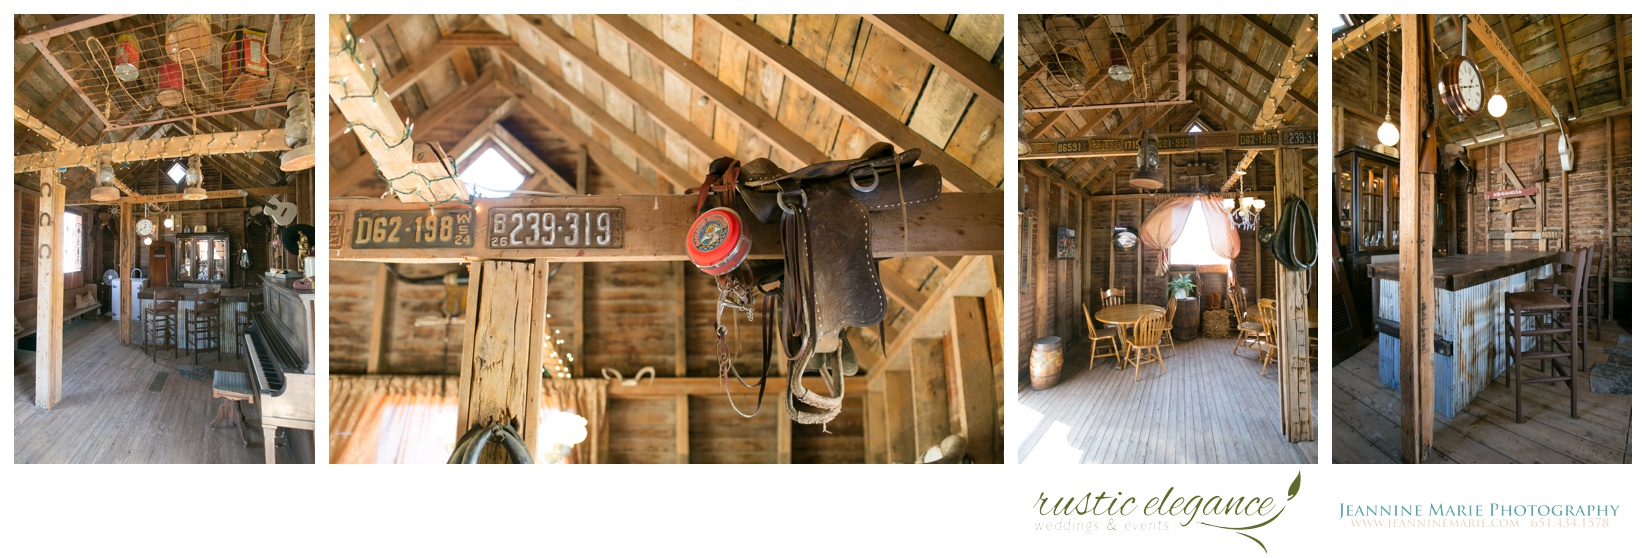 The Still Barn, Wisconsin Barn wedding, Jeannine Marie Photography, Rustic Elegance, Barn Wedding Planners_0799